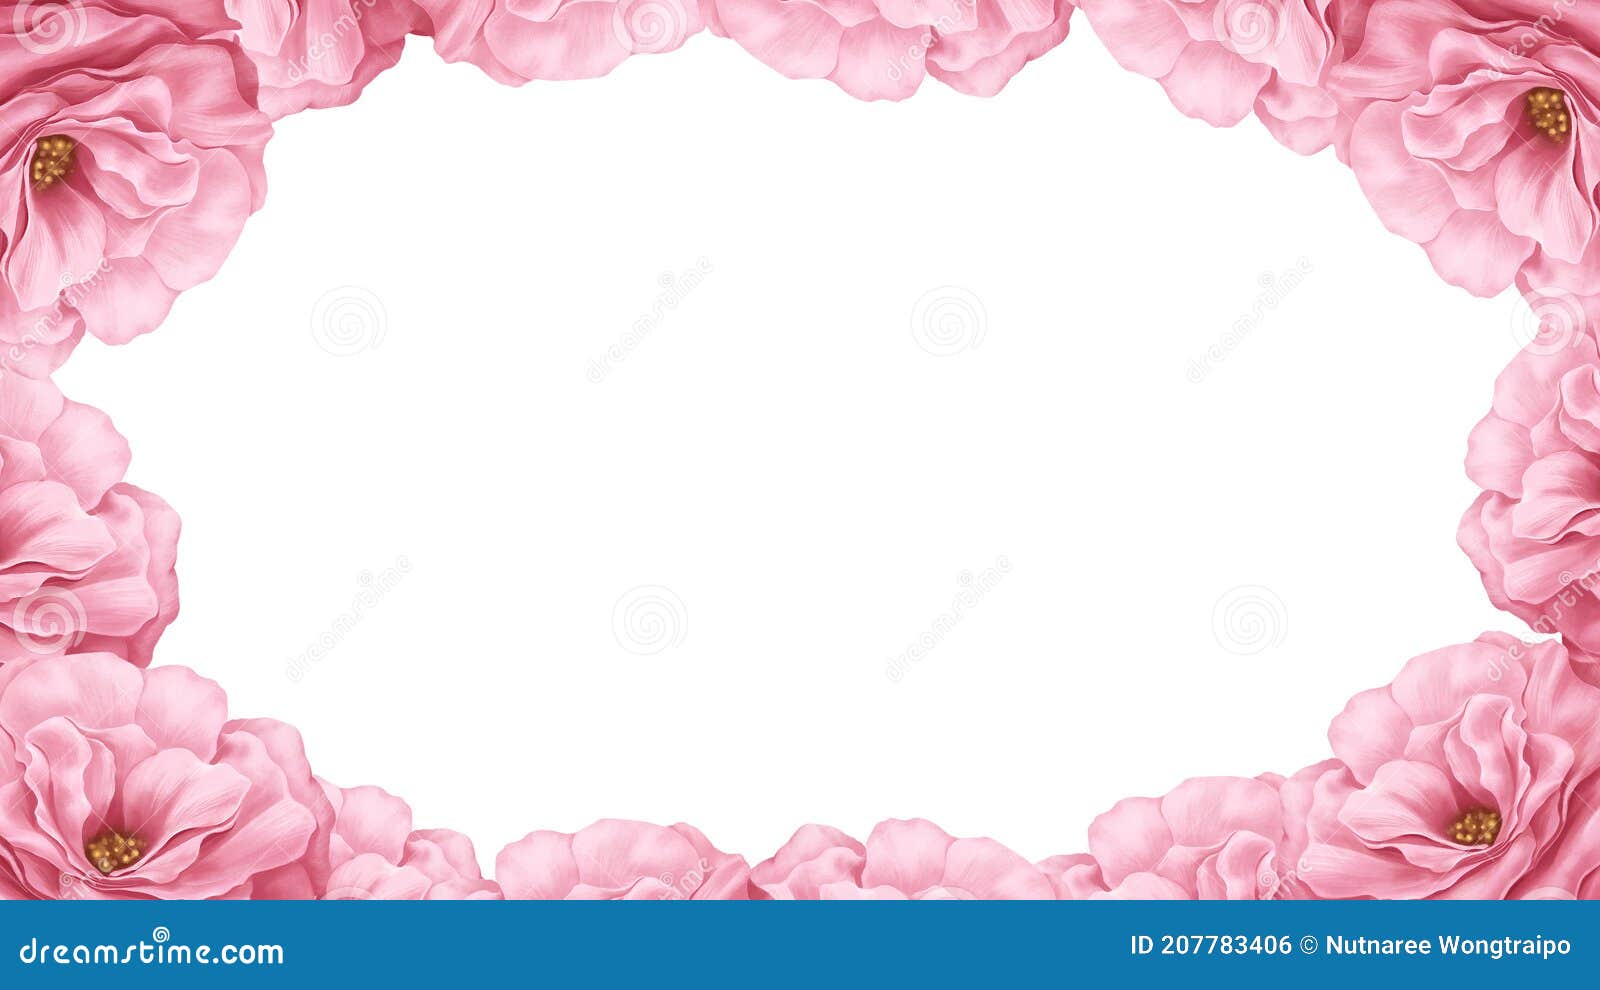 Flower frame layout stock illustration. Illustration of circle ...